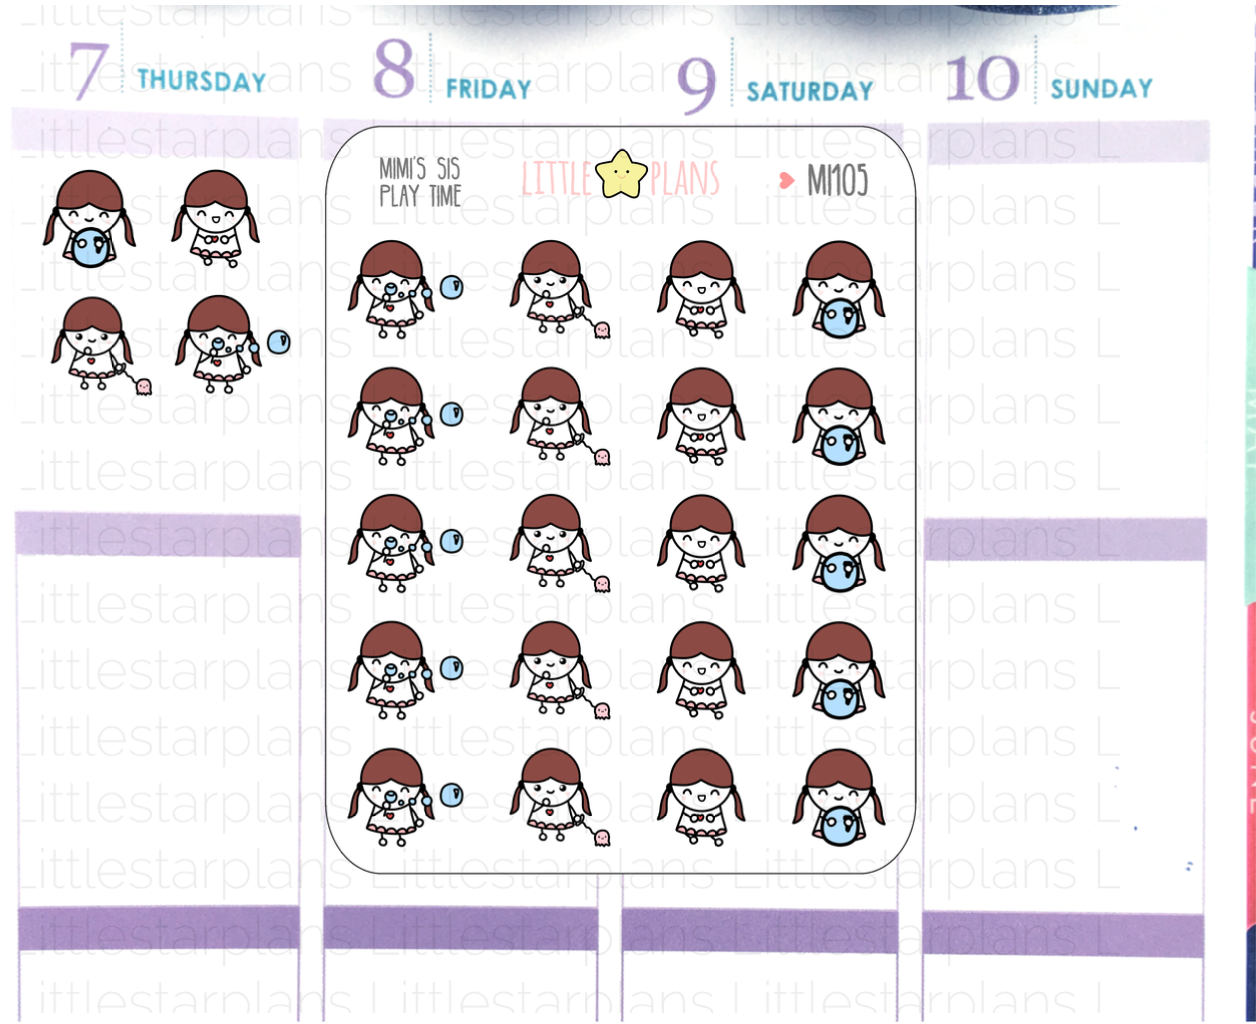 Mimi's Sister - Play Time, Kids, Pets, Bubbles, Planner Stickers (MI105) - Littlestarplans